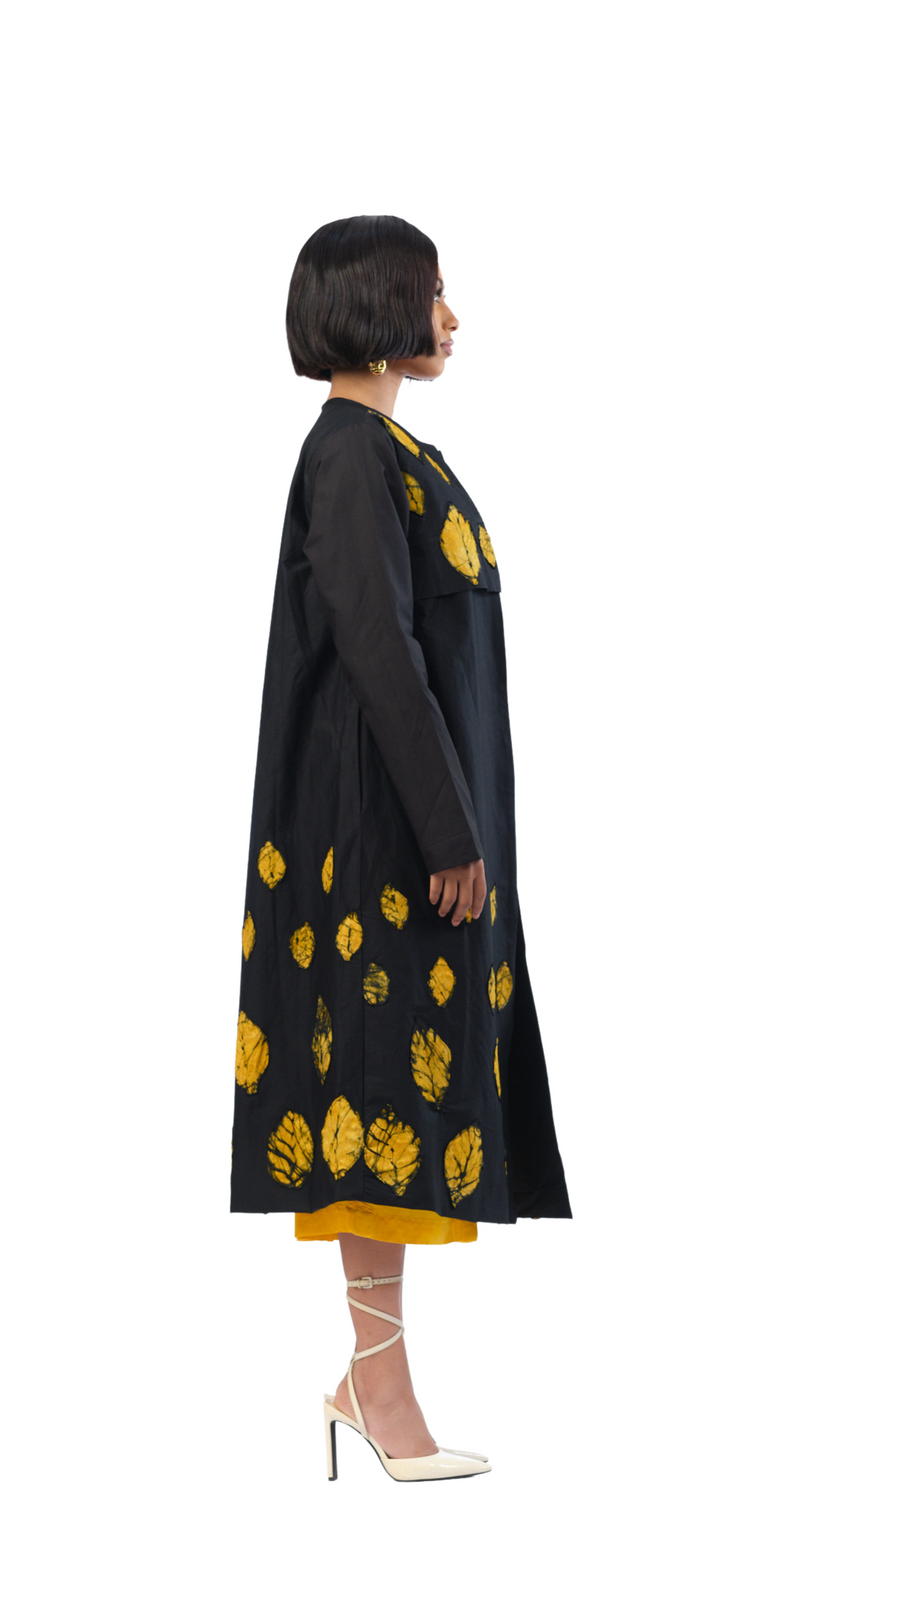 Hera Long Sleeve Jacket - Black/Yellow